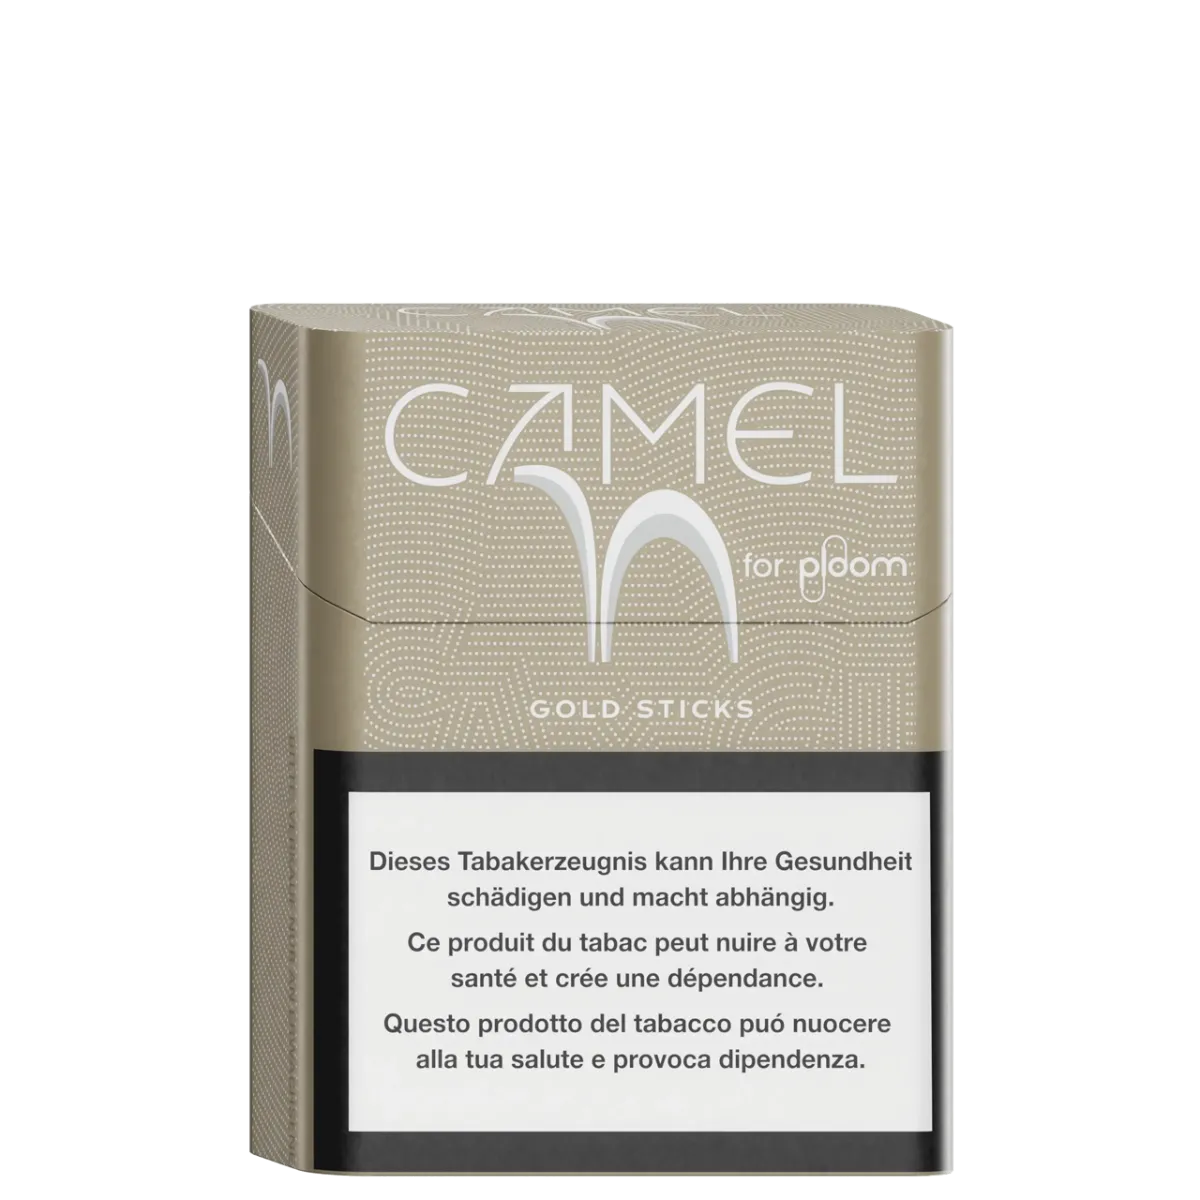 Camel Gold sticks for Ploom left angle
